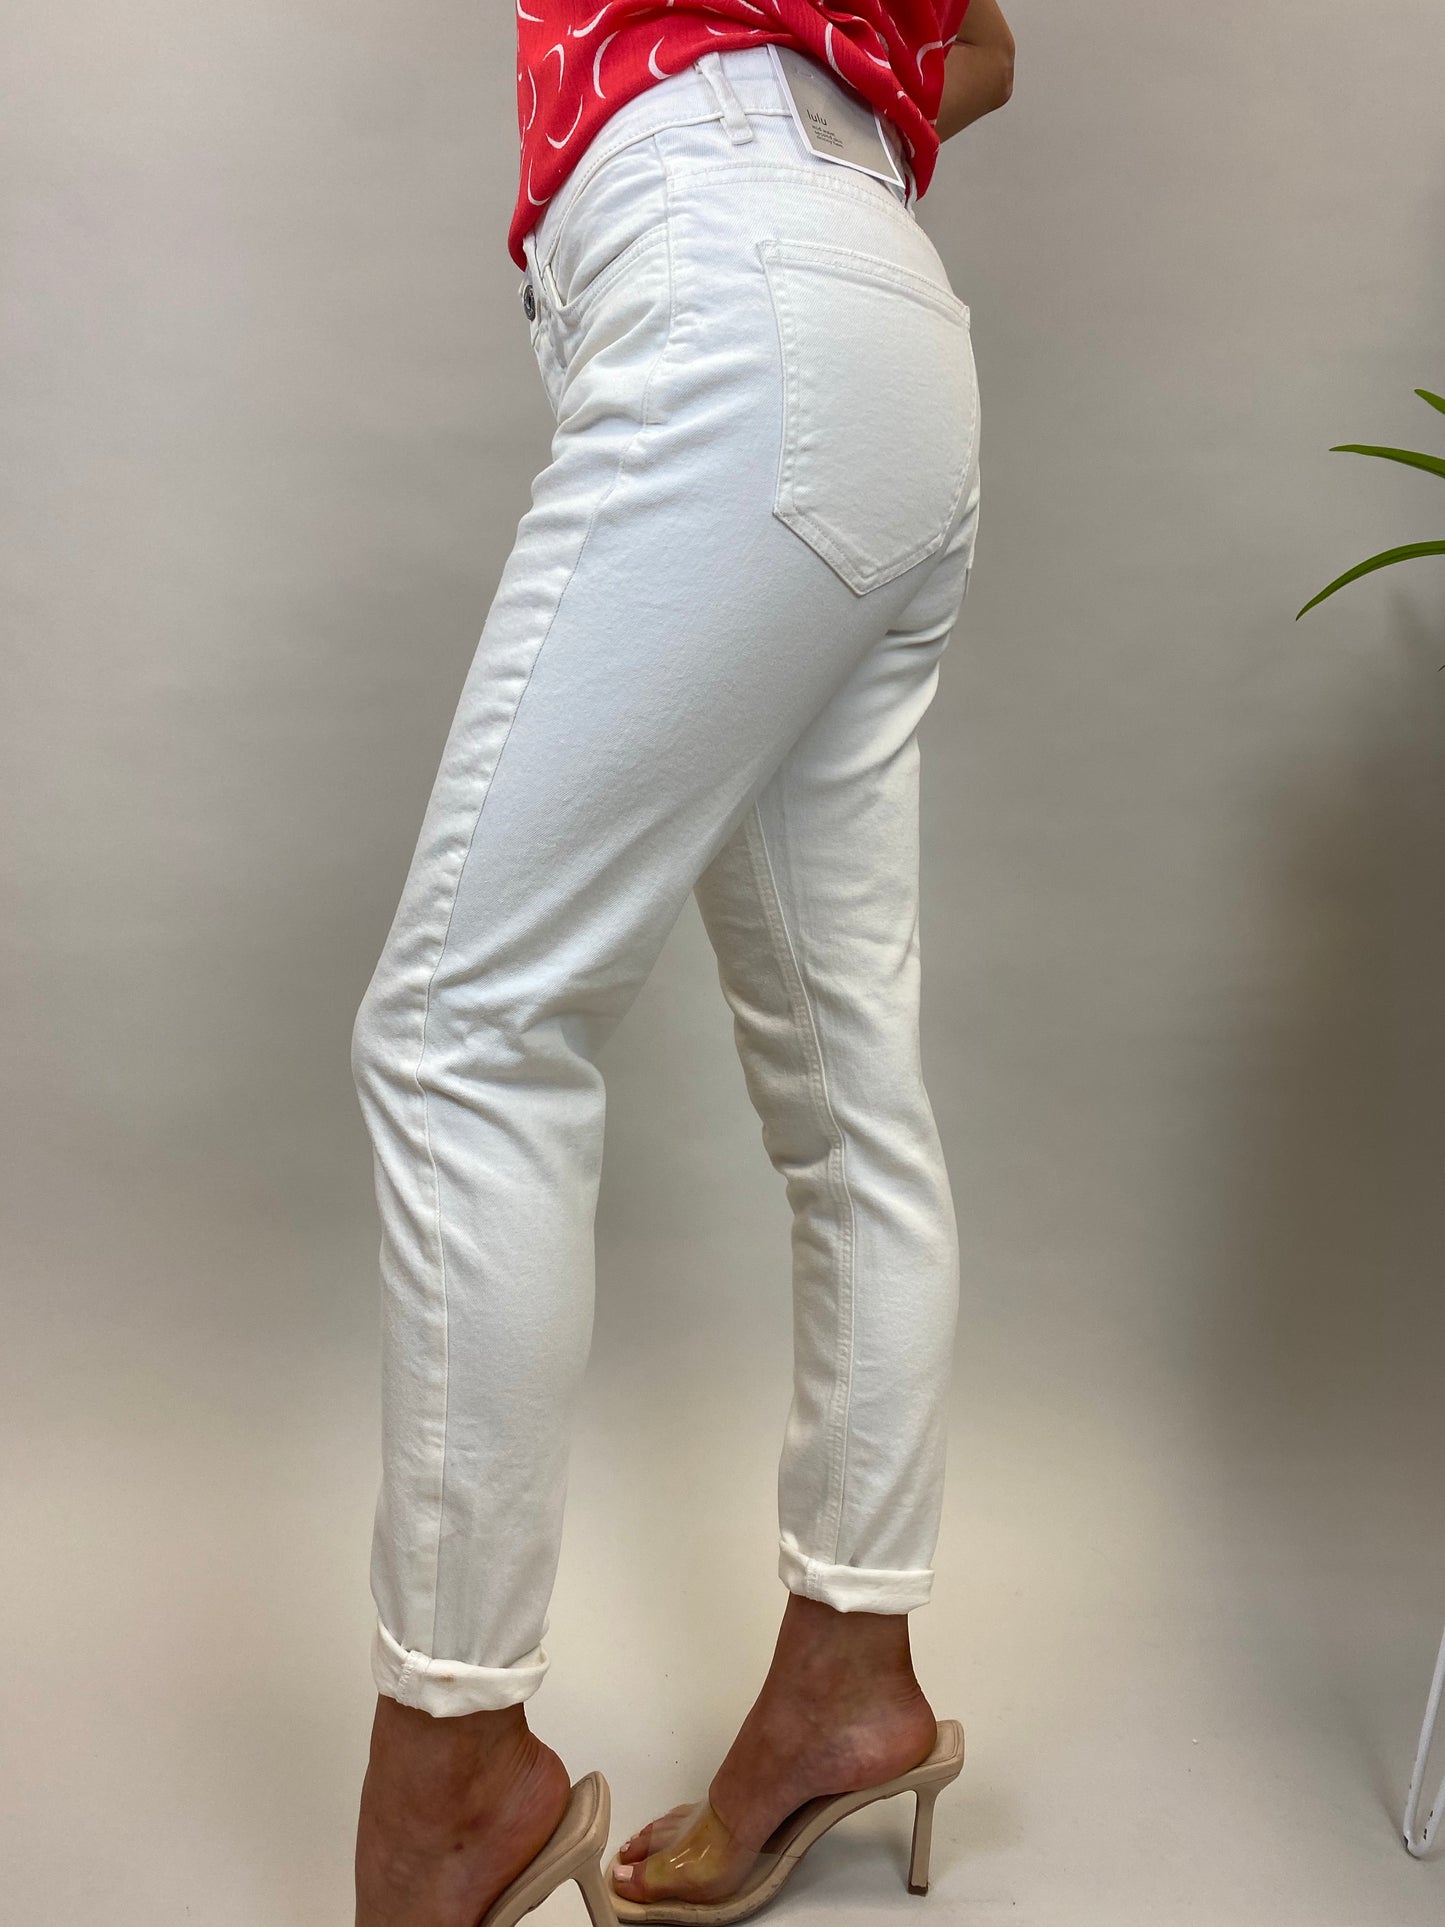 Ichi Ihziggy Lulu White Skinny Jeans